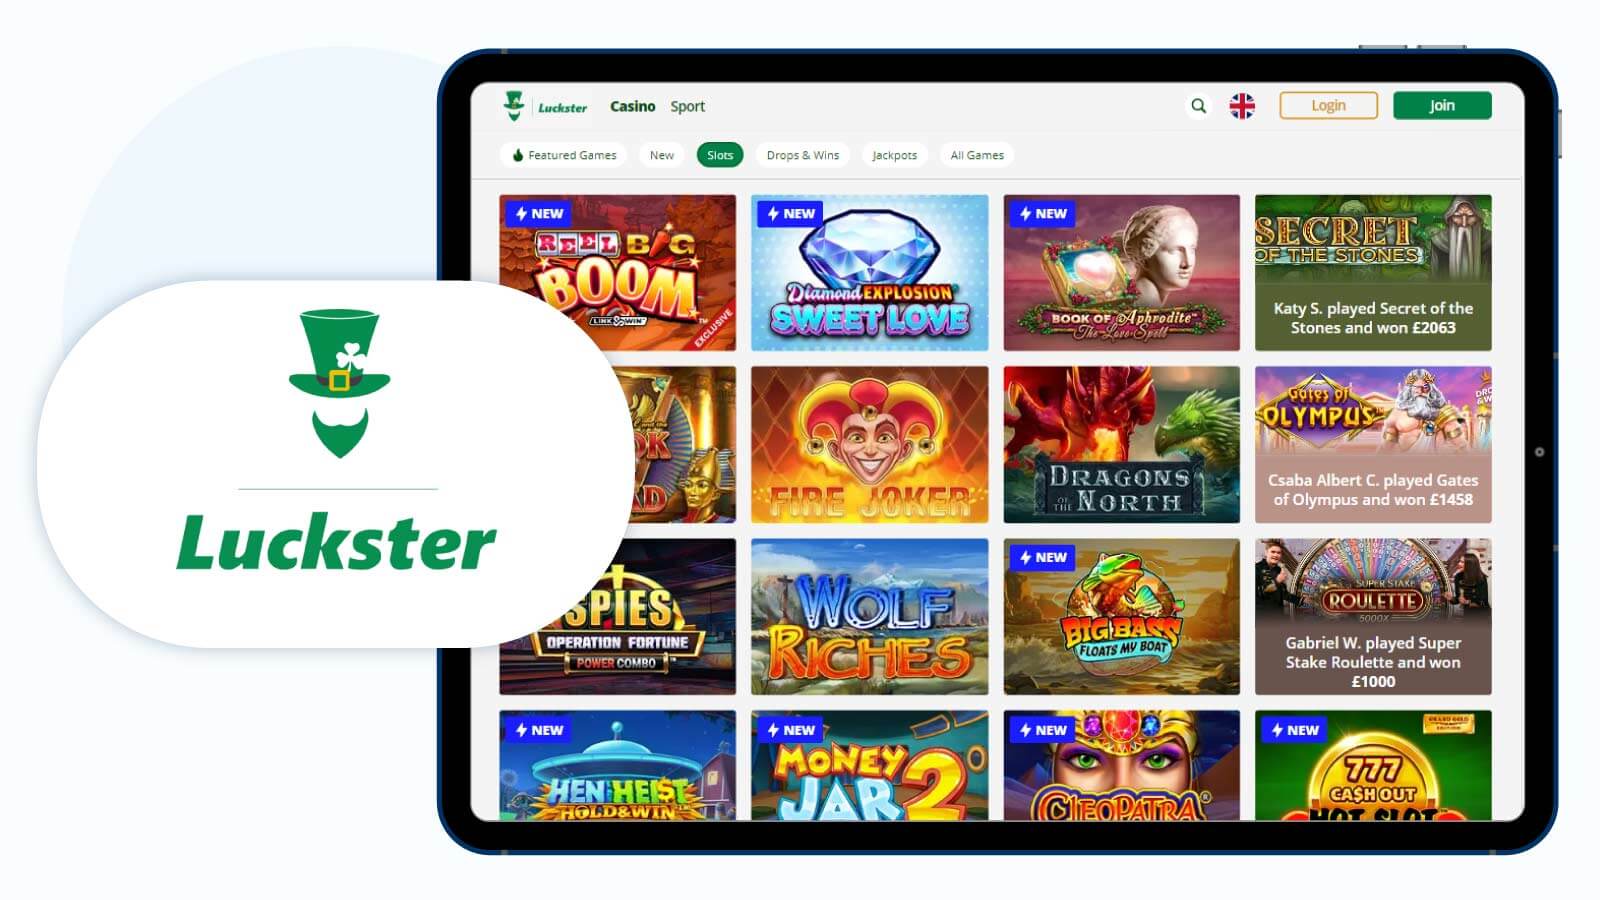 Luckster-Casino-Runner-up-for-Best-Overall-Barcrest-Site